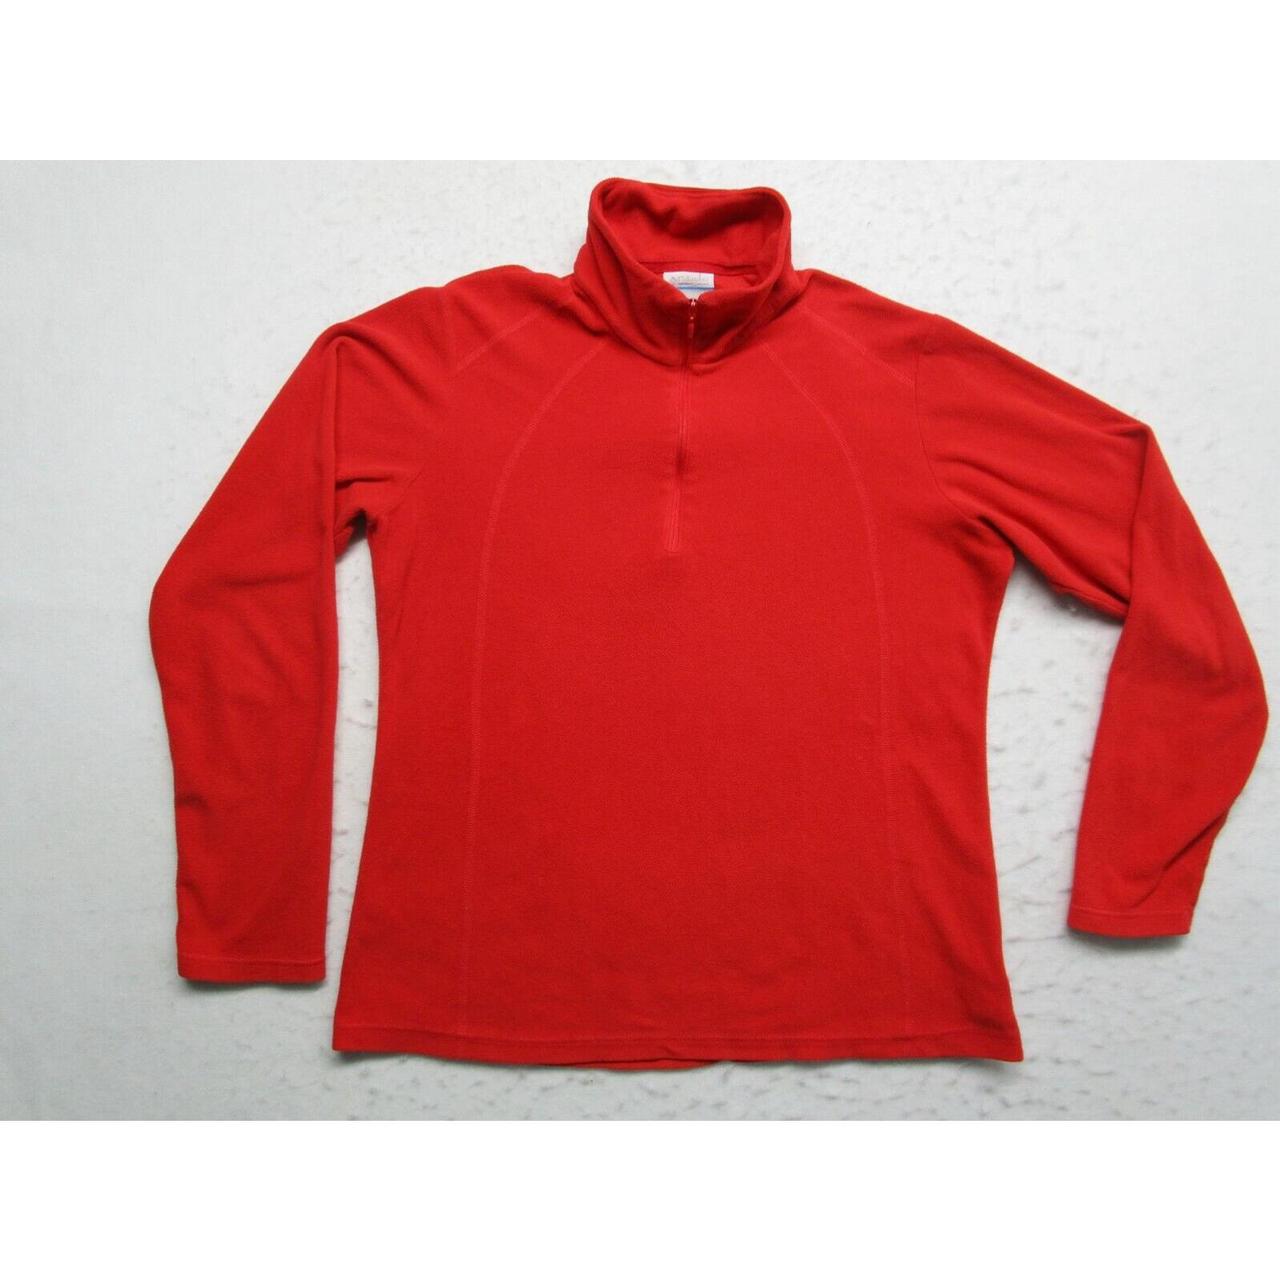 NICCE Women's Red Sweatshirt